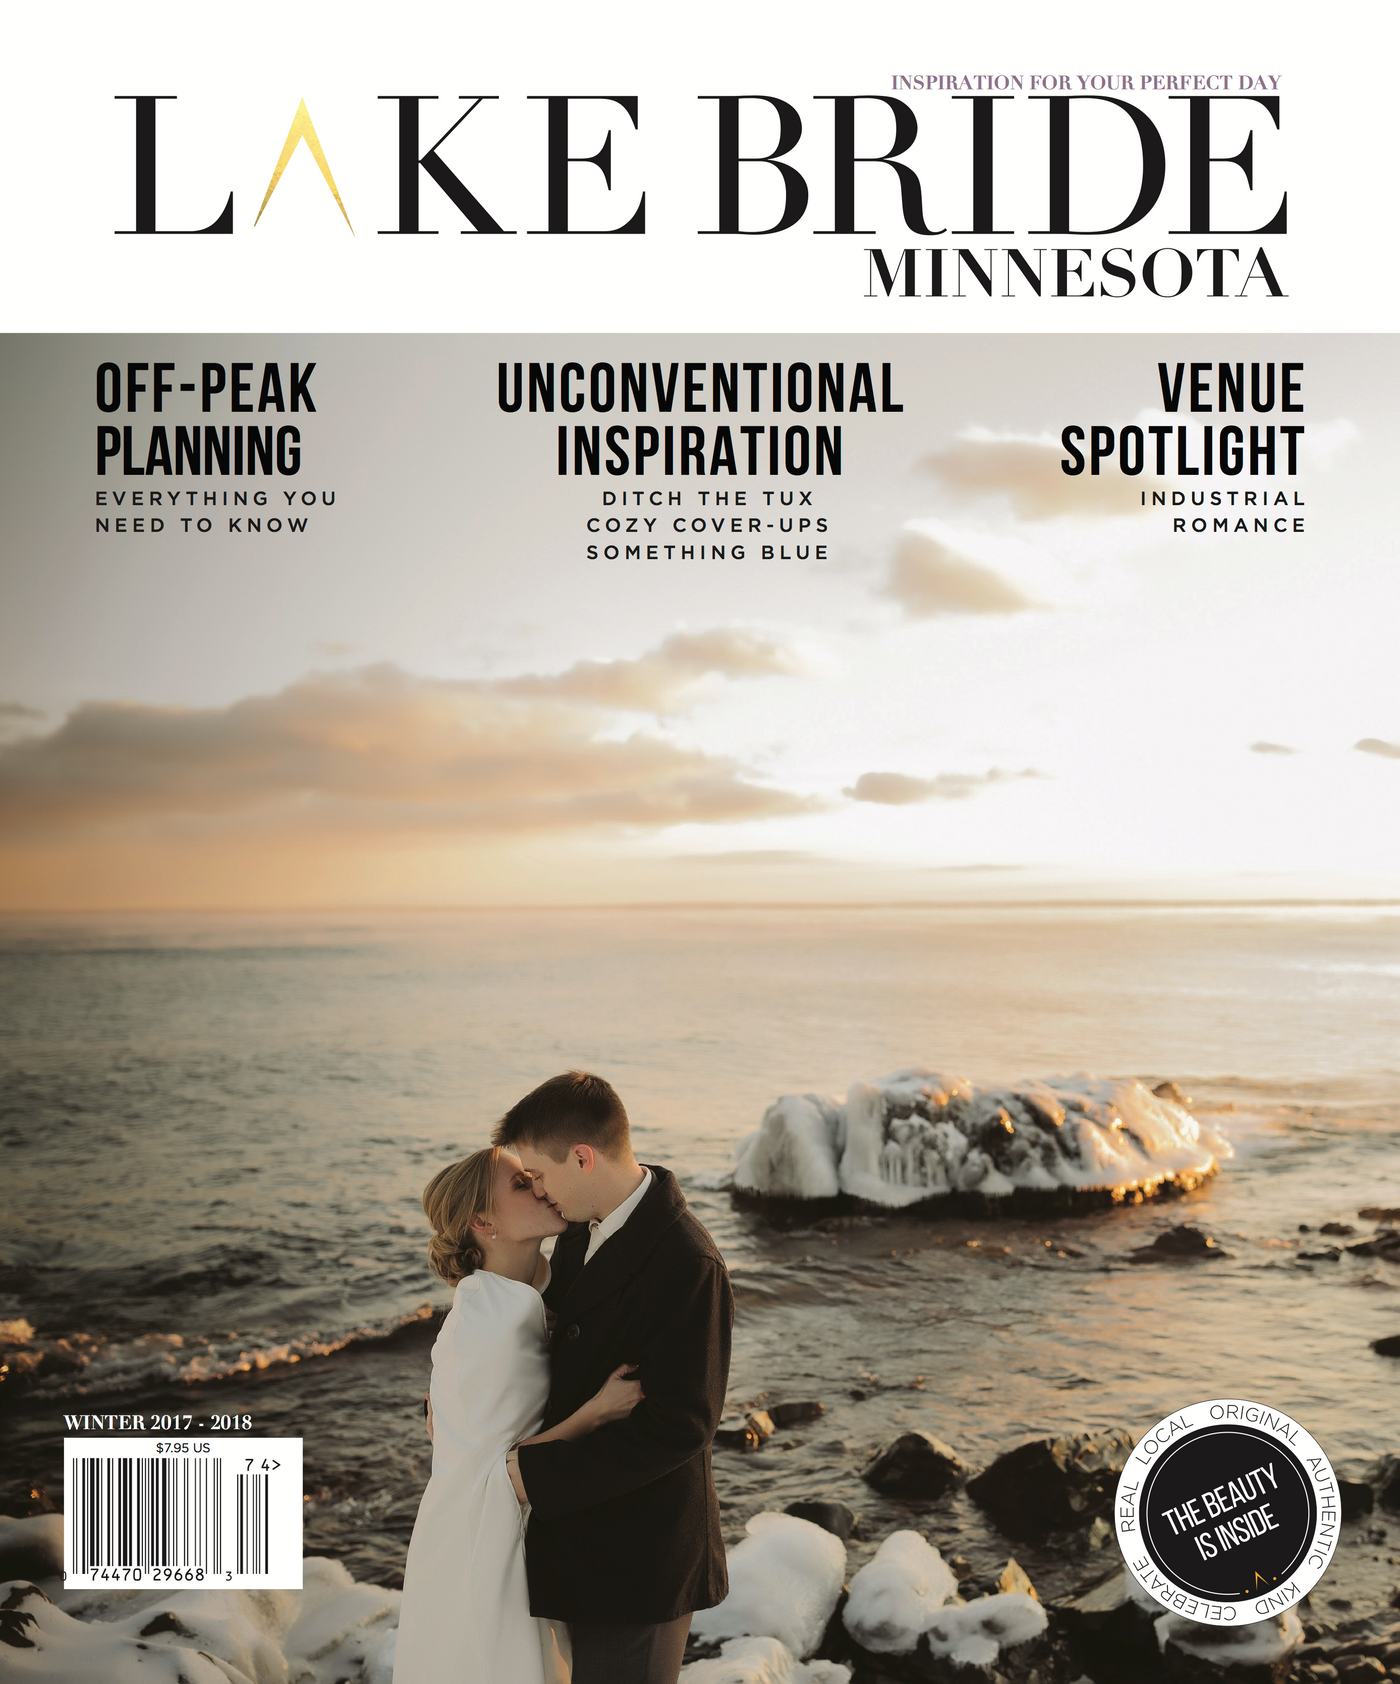 Lake Bride Magazine: Volume 2, Issue 4 - The Lake and Company